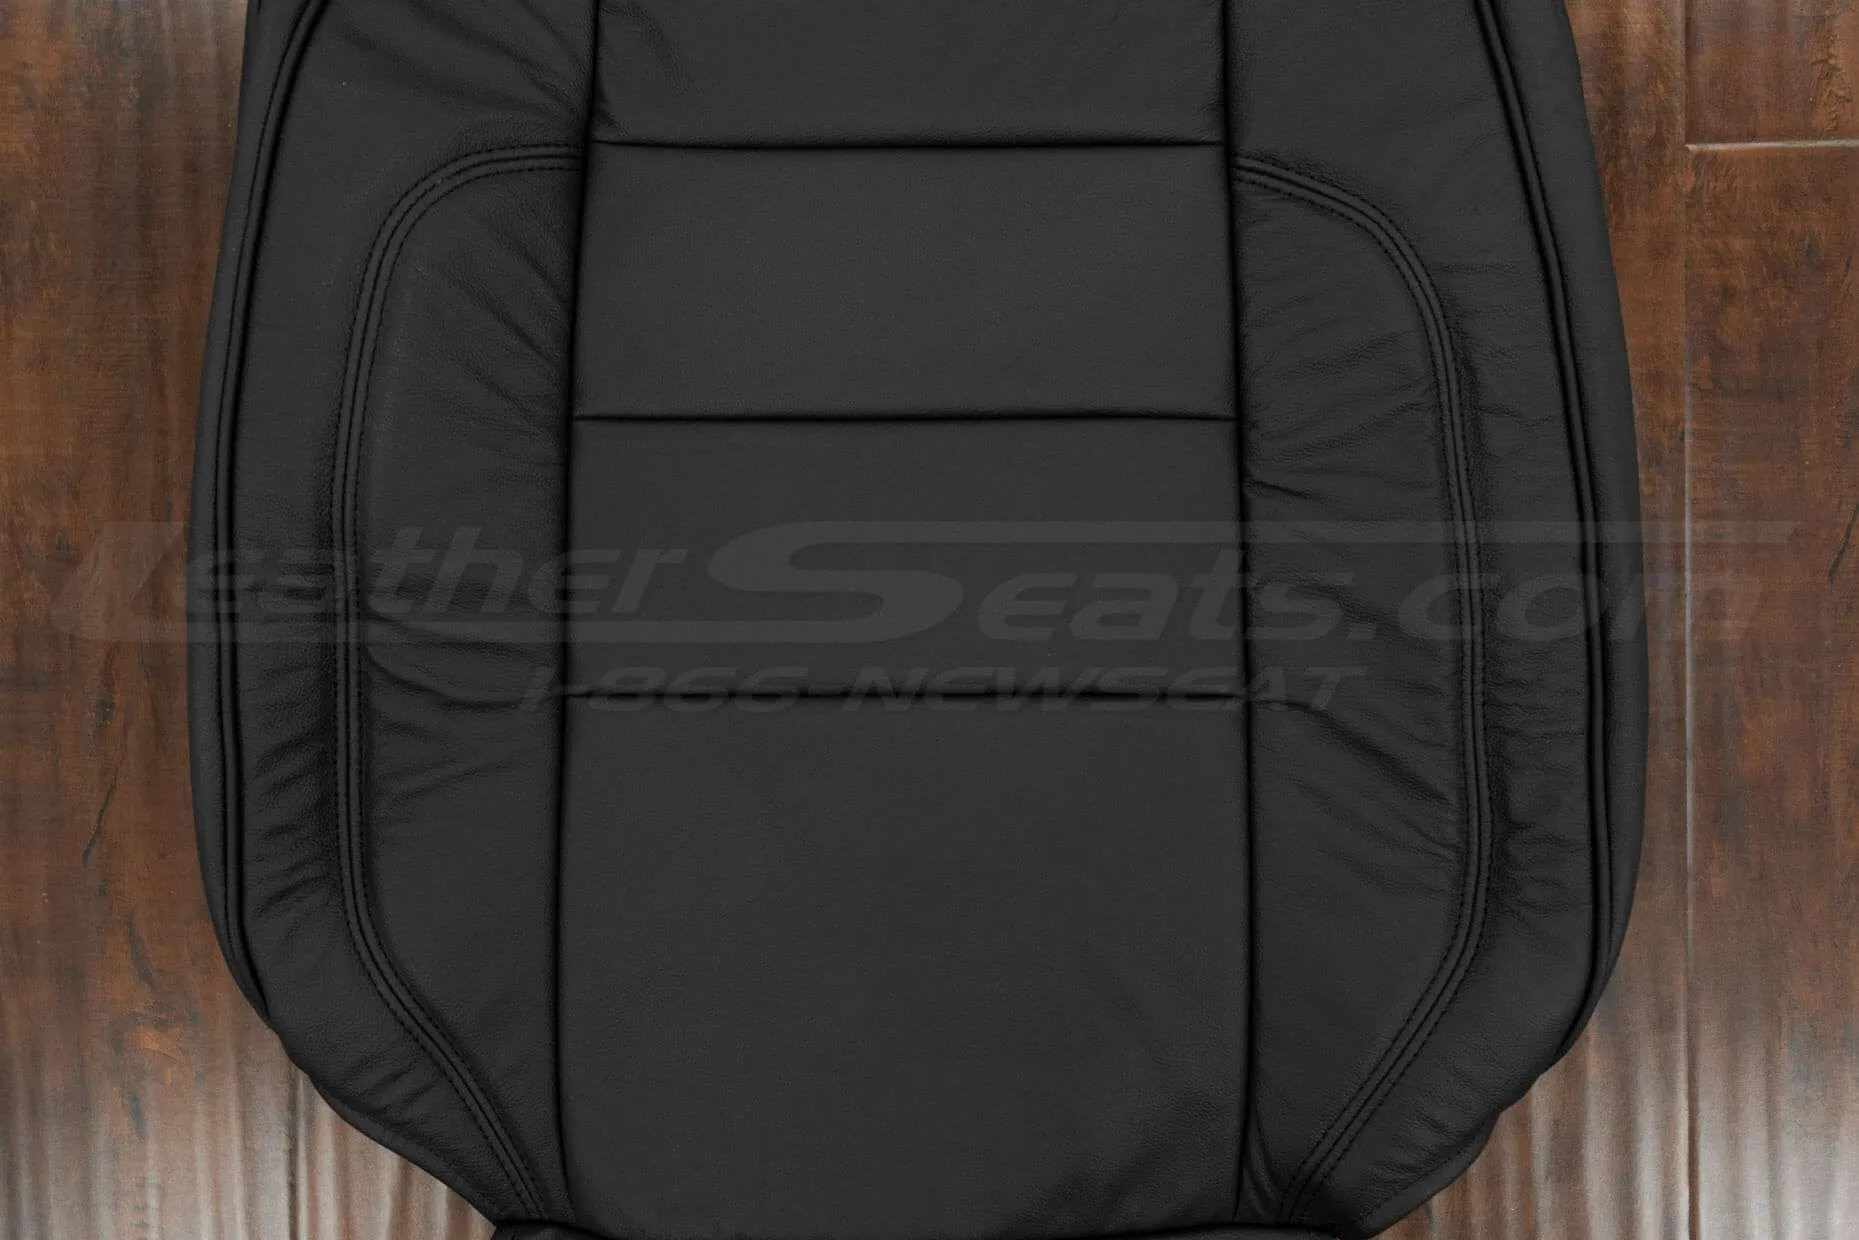 Black leather insert section of backrest upholstery